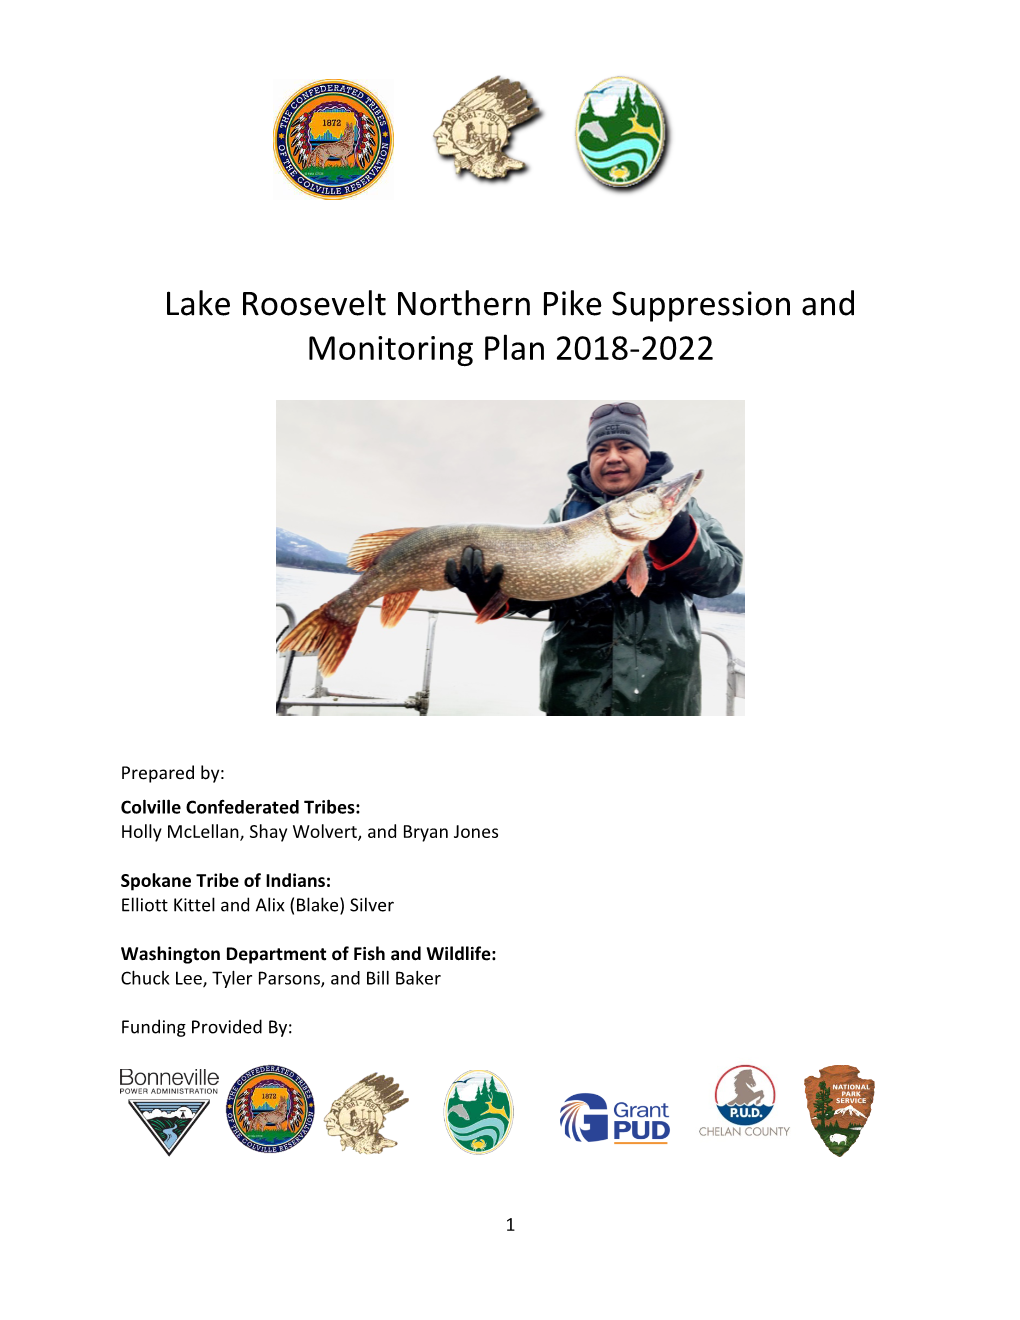 Lake Roosevelt Northern Pike Suppression and Monitoring Plan 2018-2022